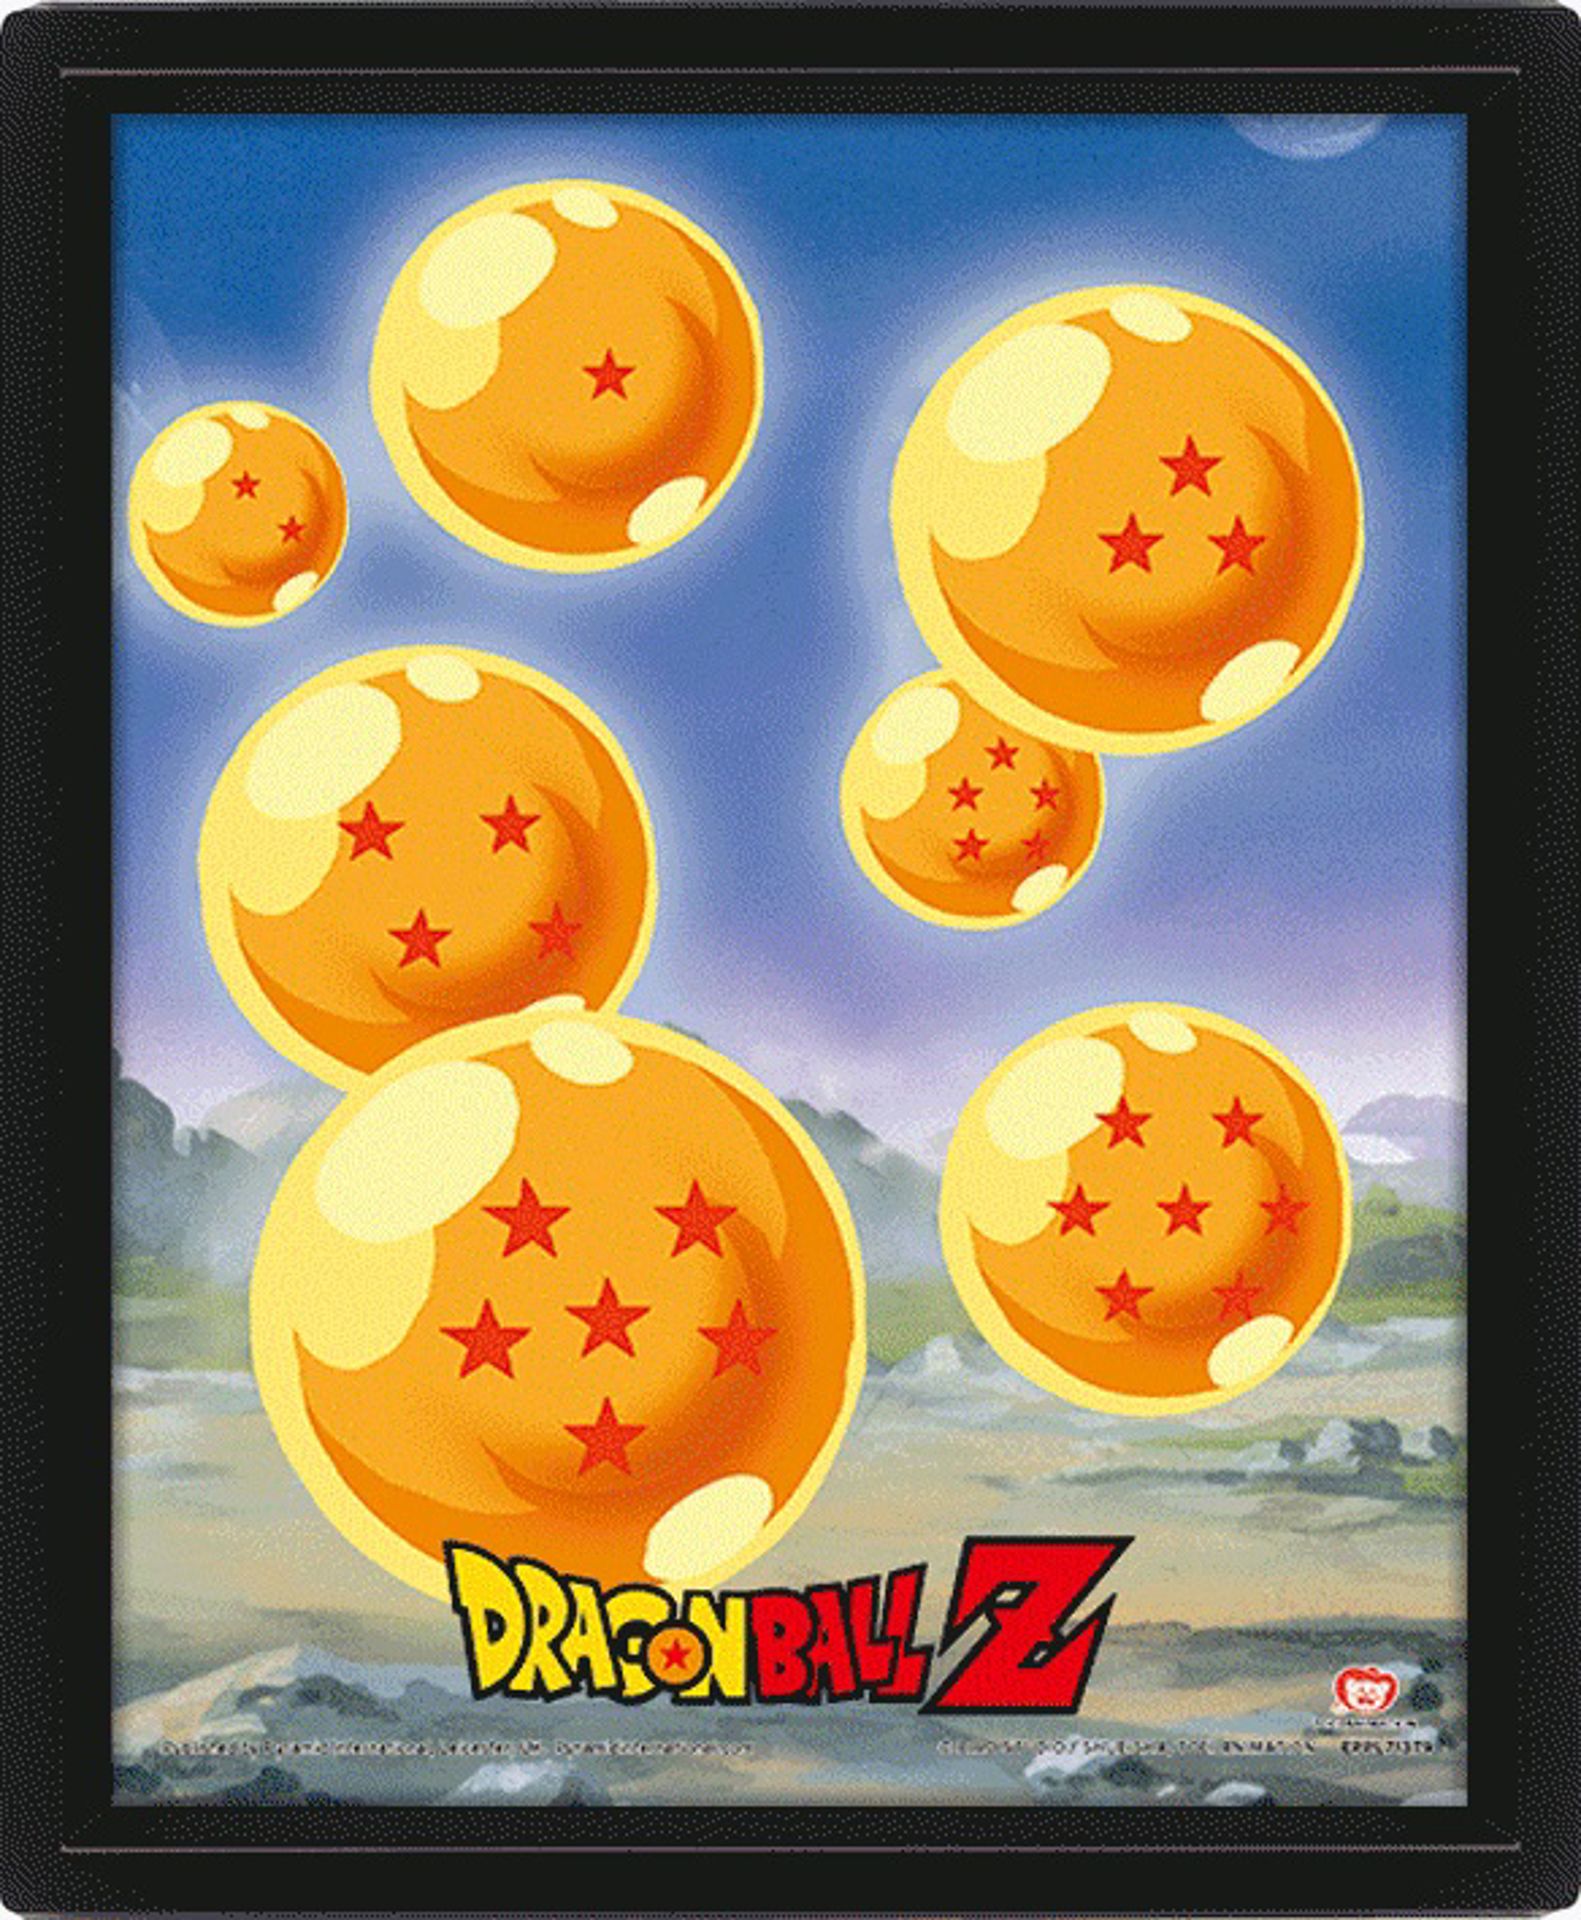 Dragon Ball Z - Shenron Unleashed 3D Lenticular Poster